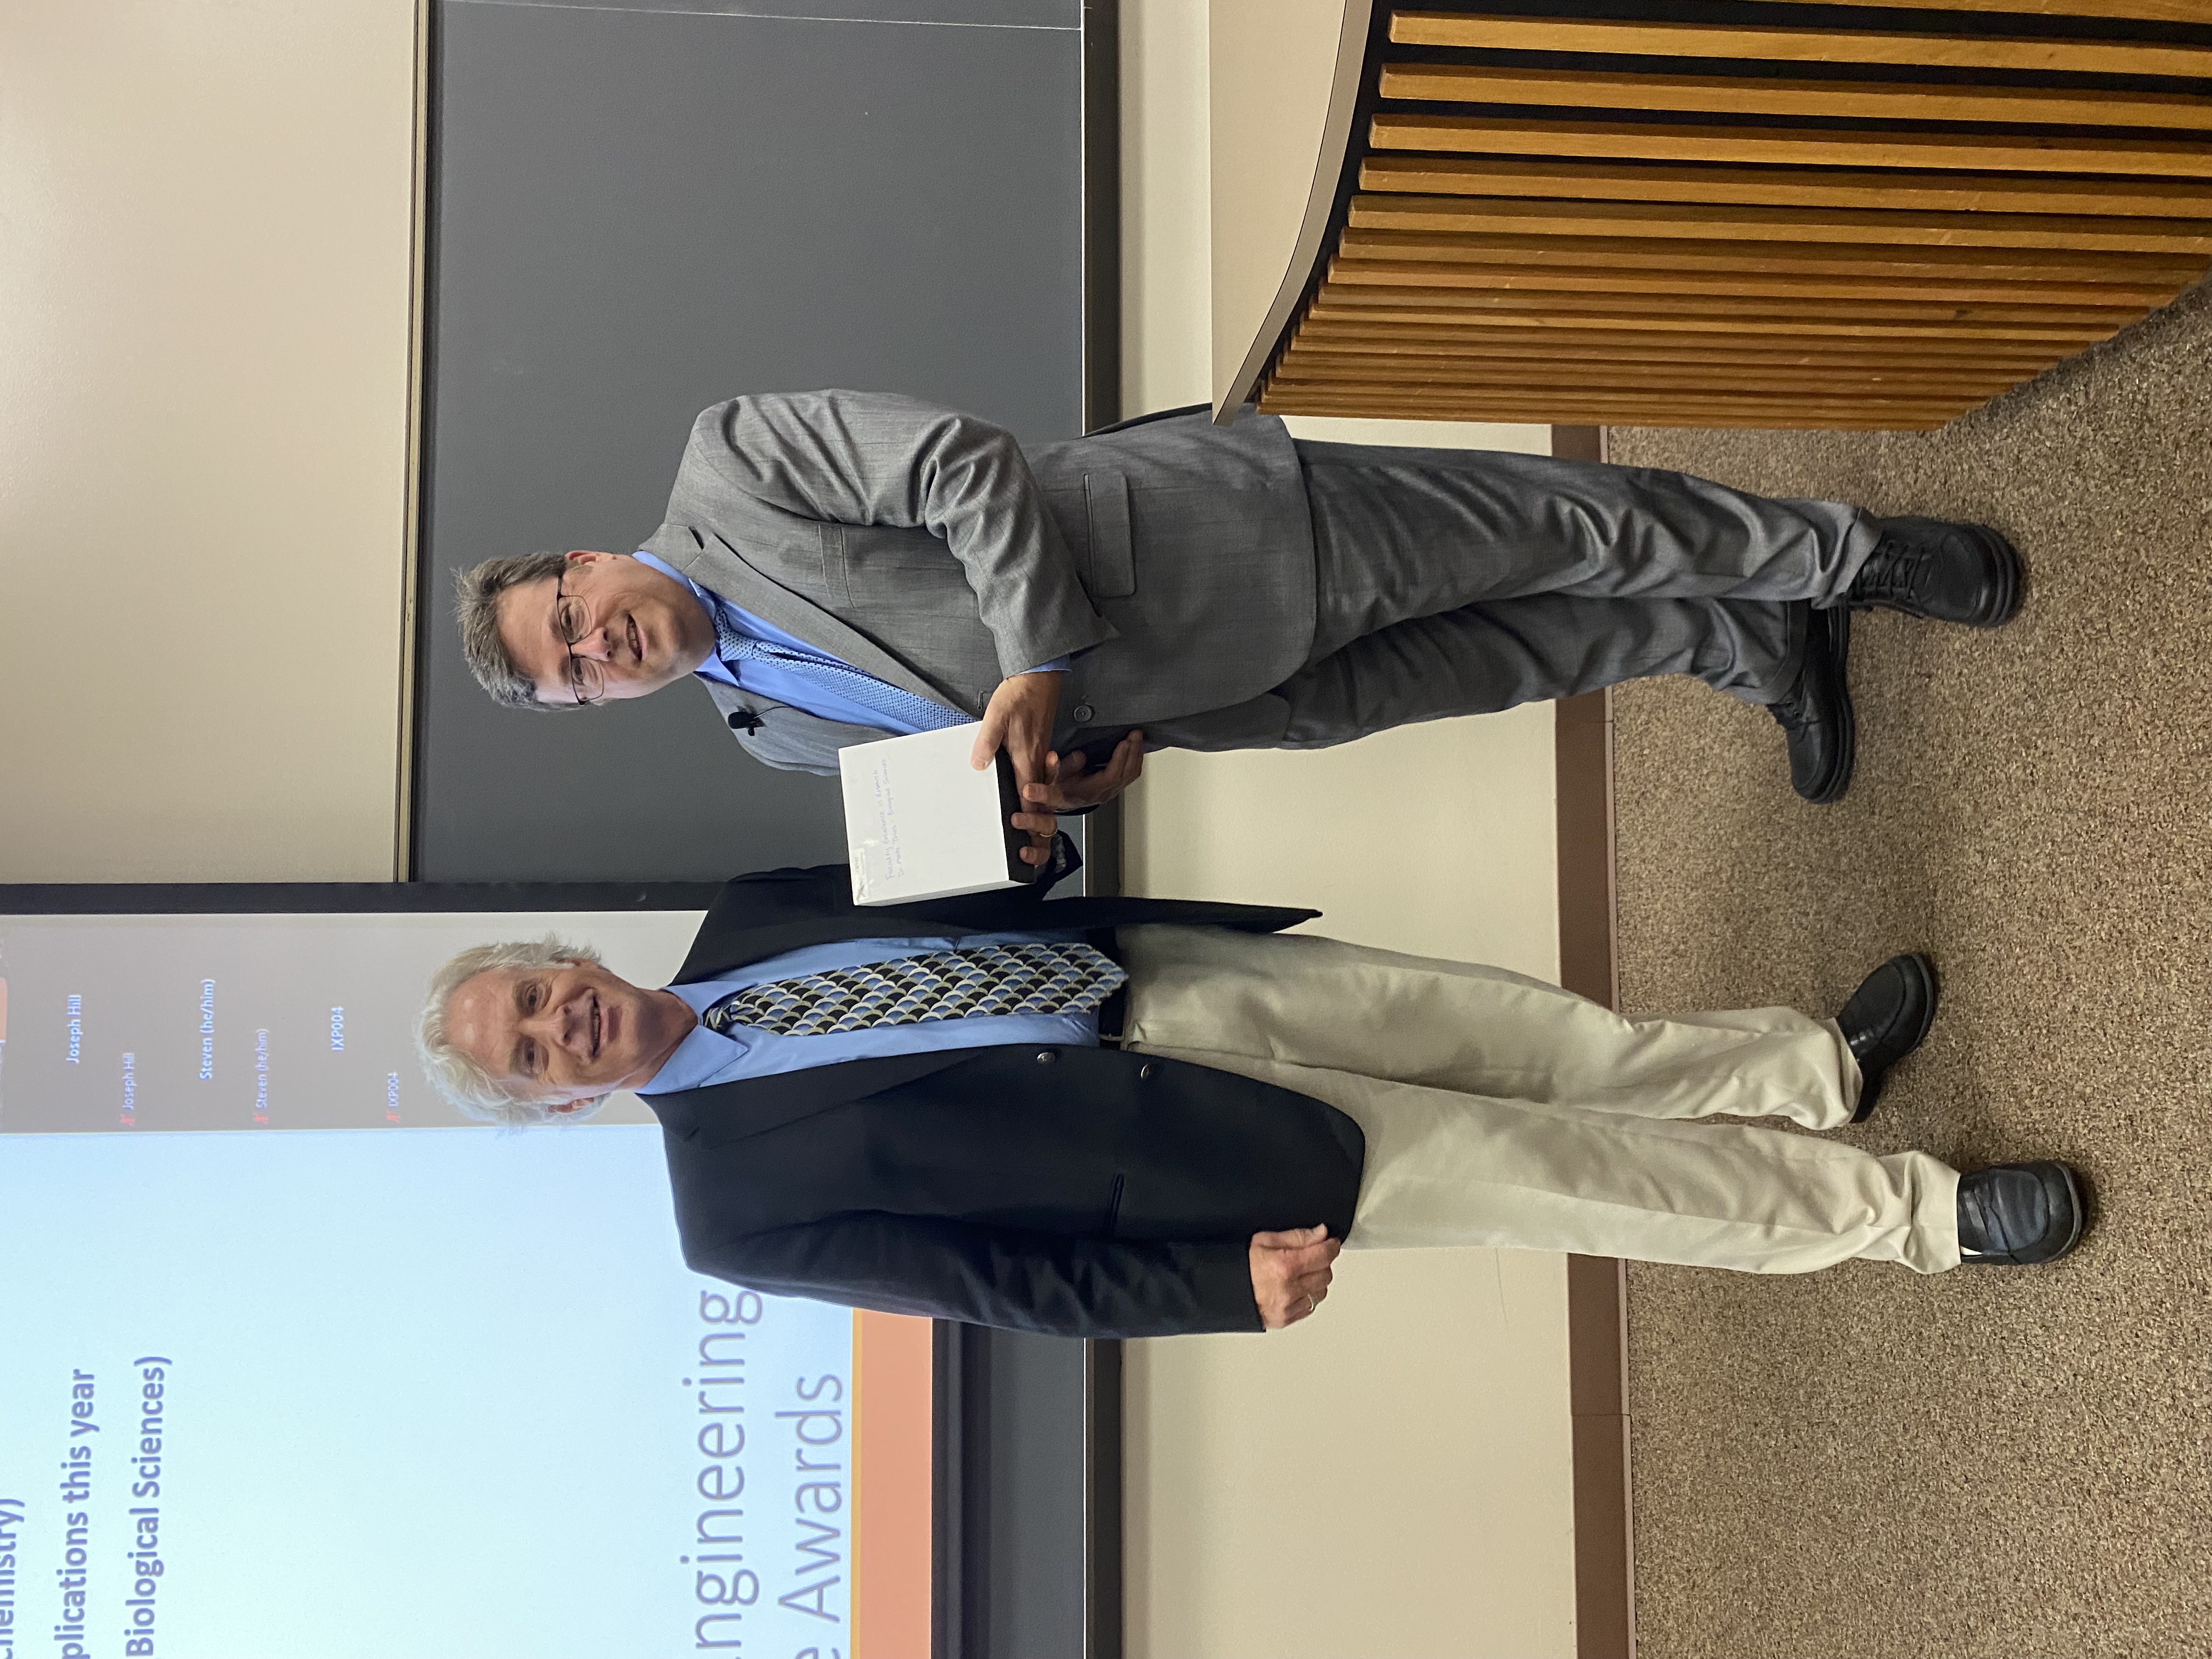 Dr. Monte Thies accepts his award from Dean John Pascarella